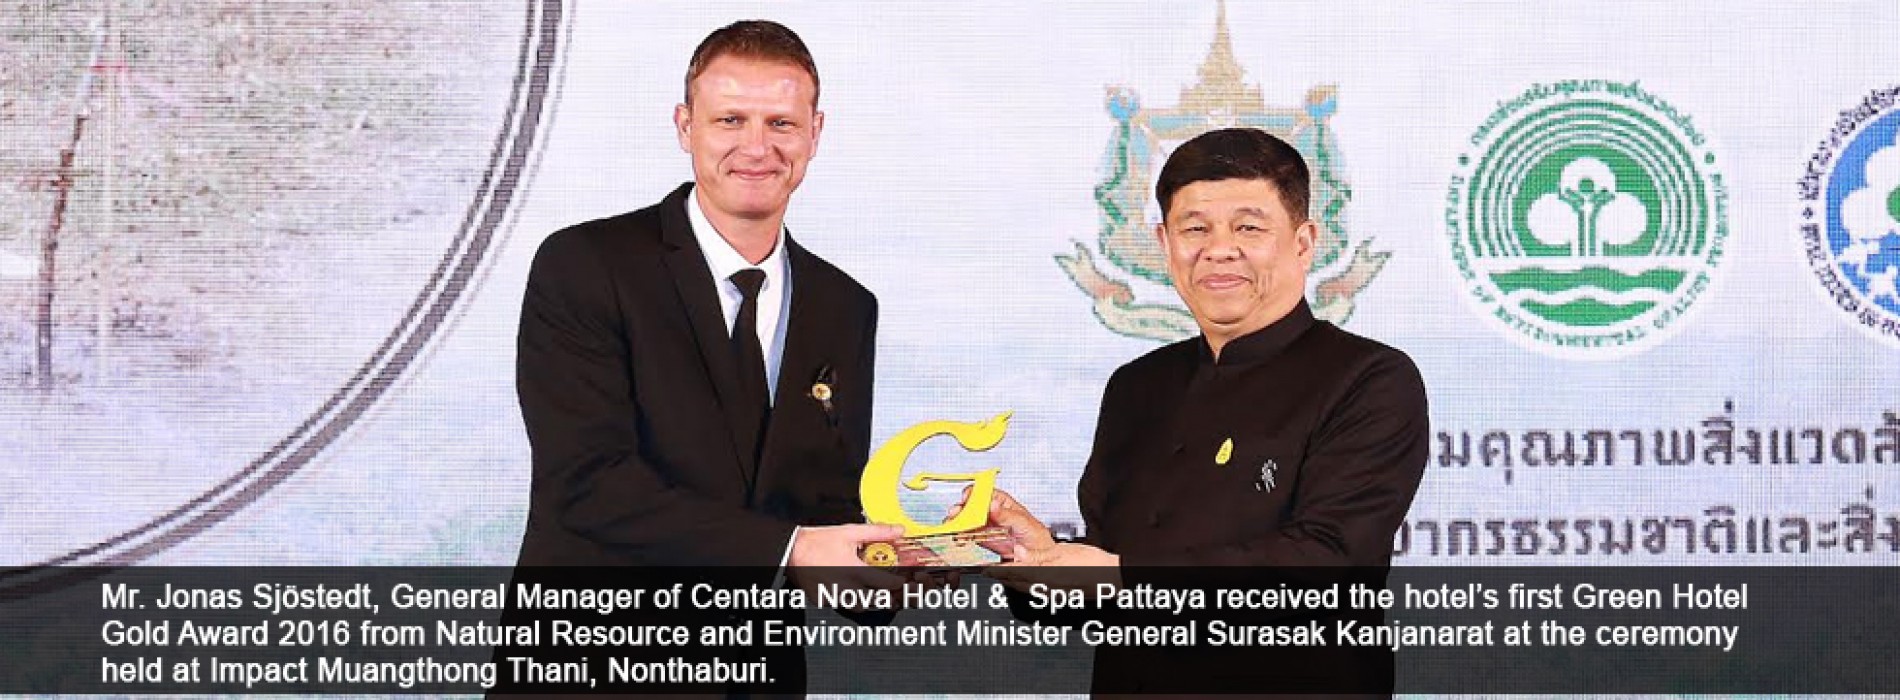 Centara Nova Hotel & Spa Pattaya took home Green Hotel Gold Award 2016